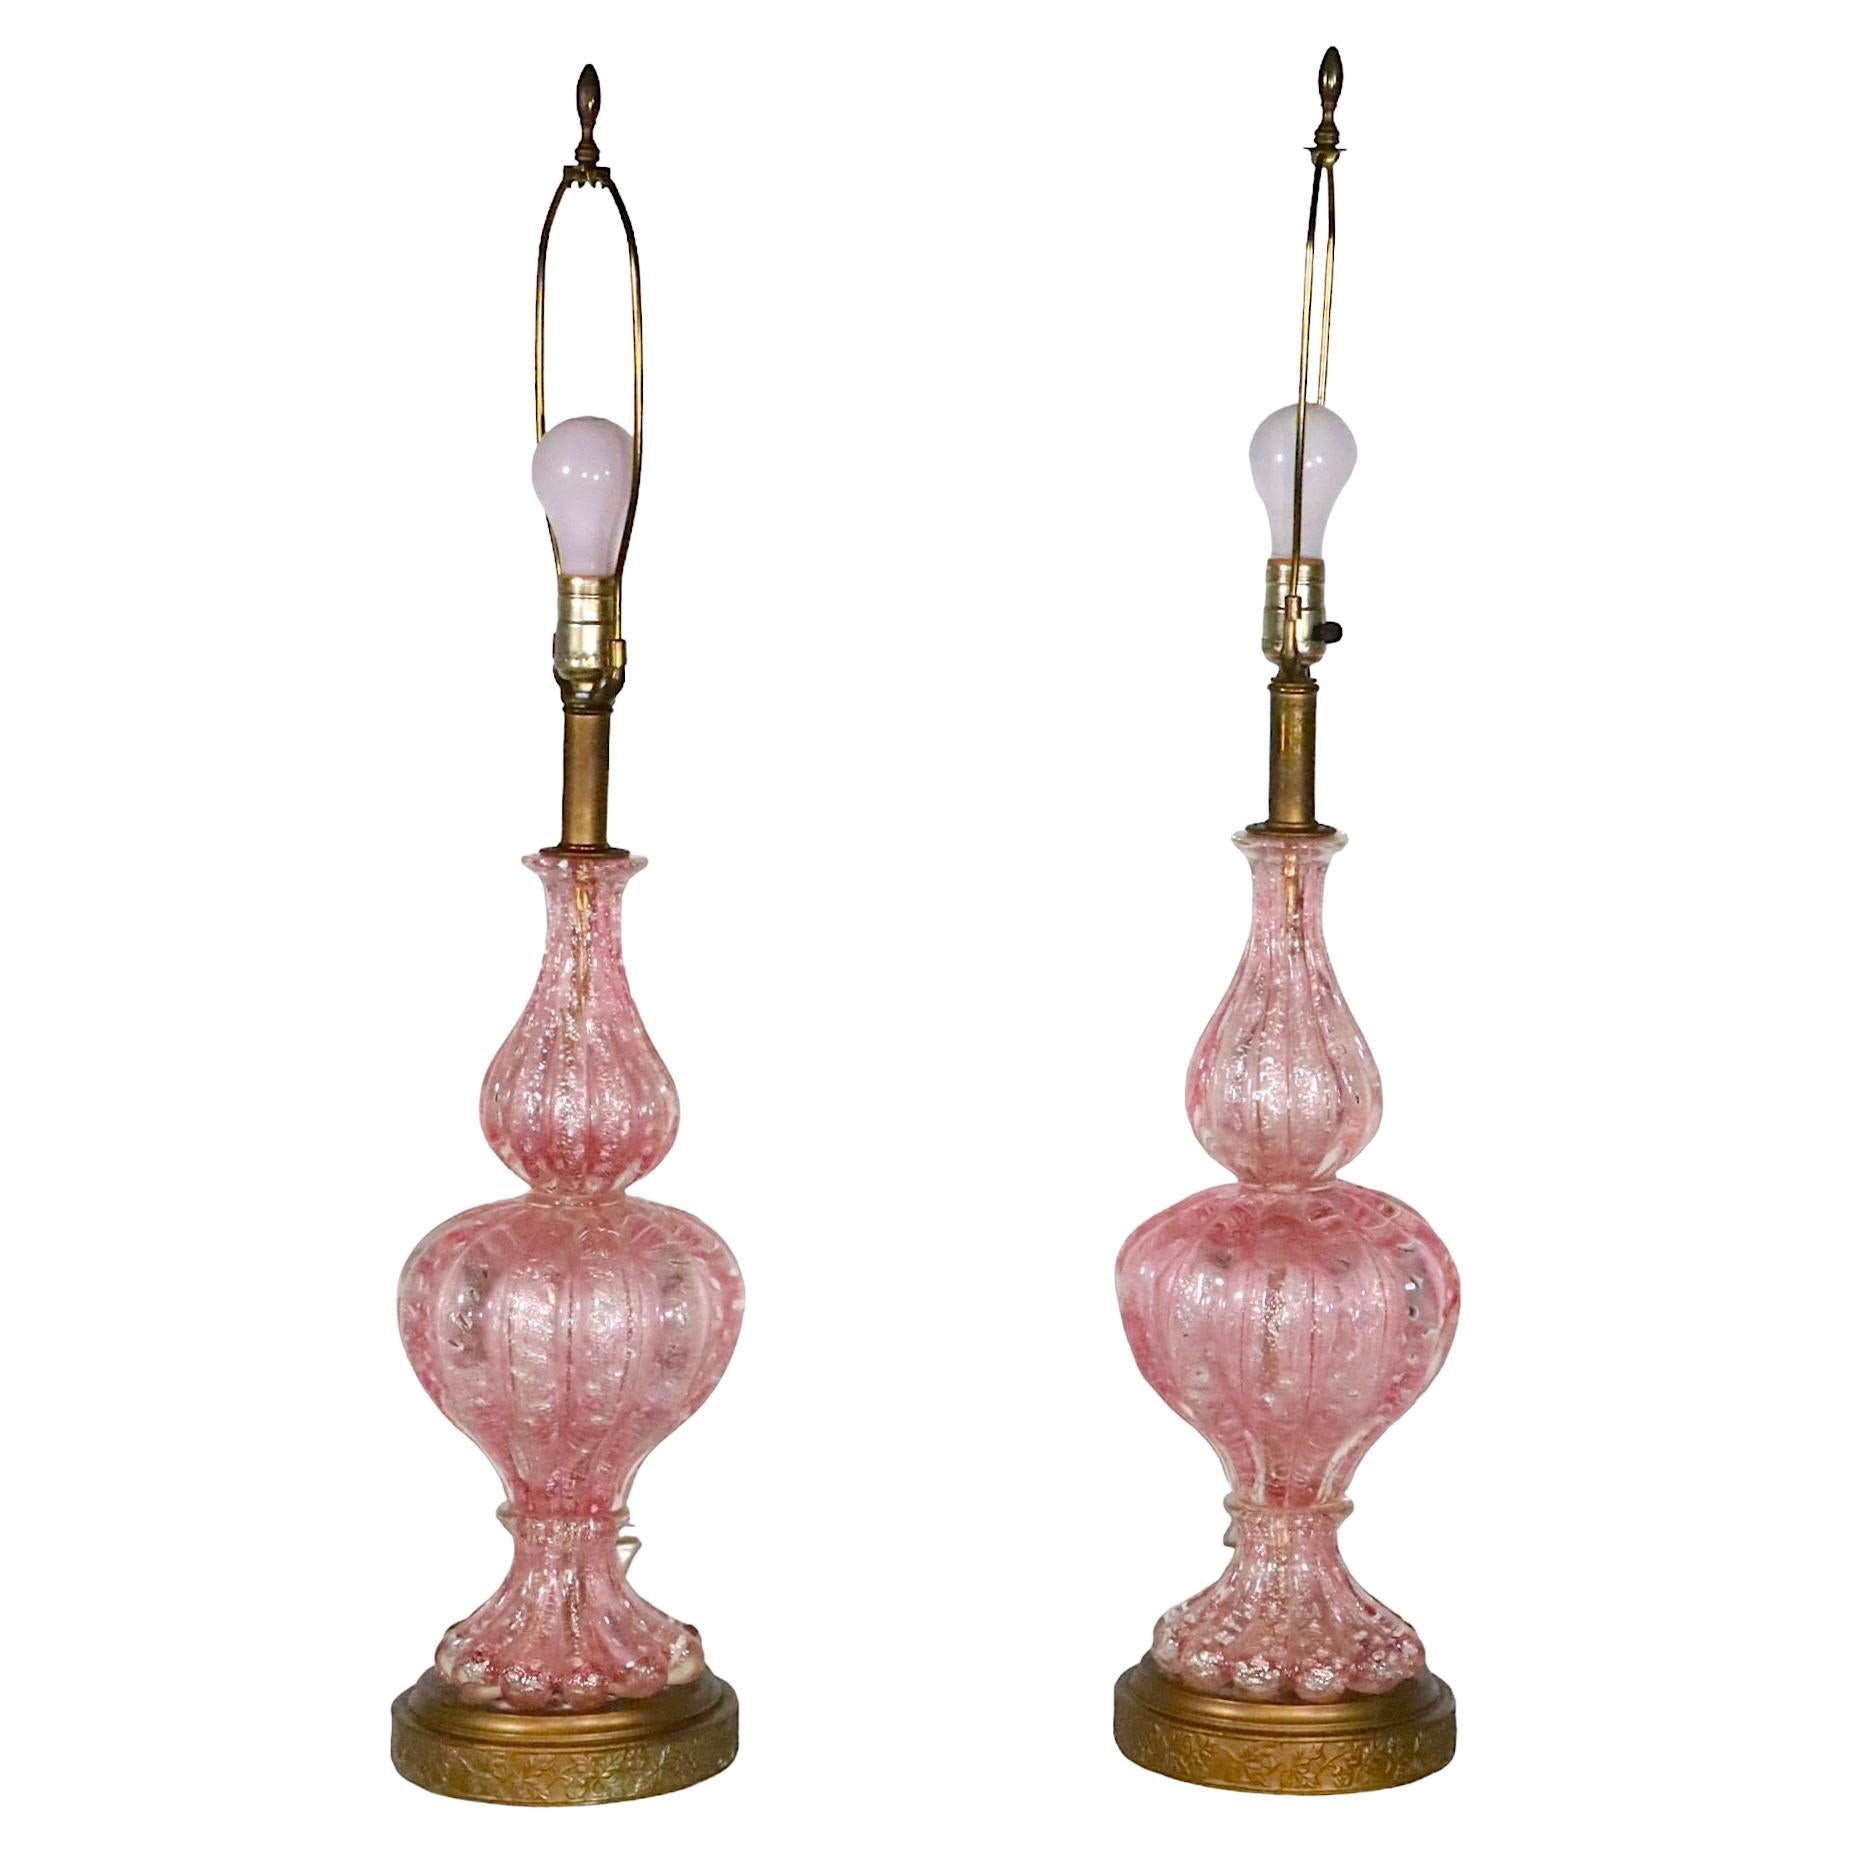 Pr. Murano Art Glass Table Lamps Made in Italy  att.  to  Barovier c. 1950’s 